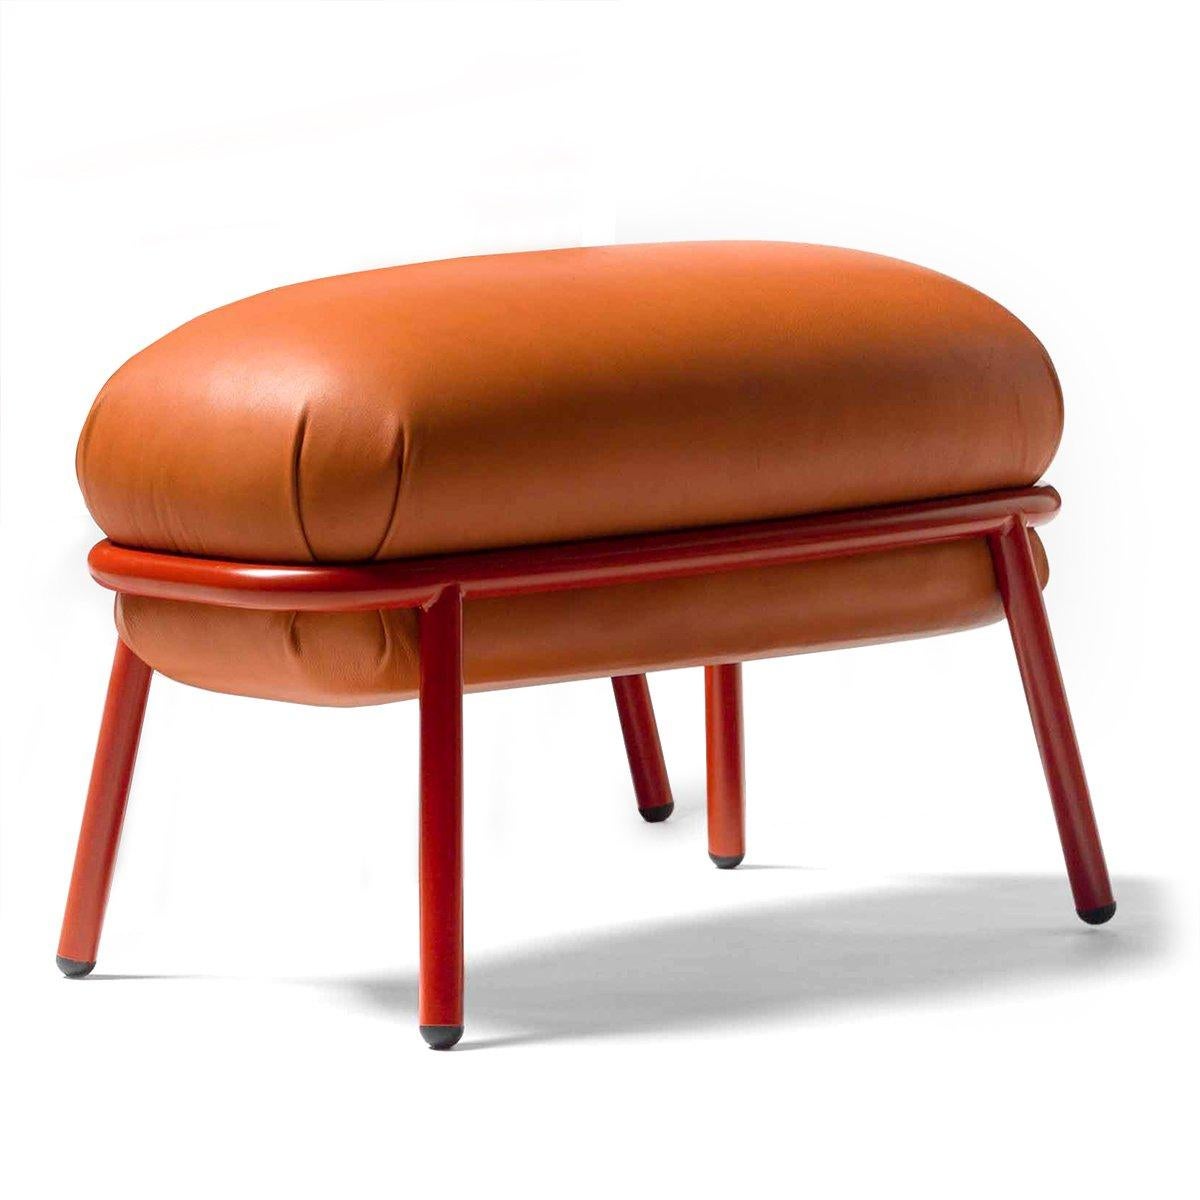 Mid-Century Modern Grasso Footstool, Designed by Stephen Burks for BD Barcelona Design